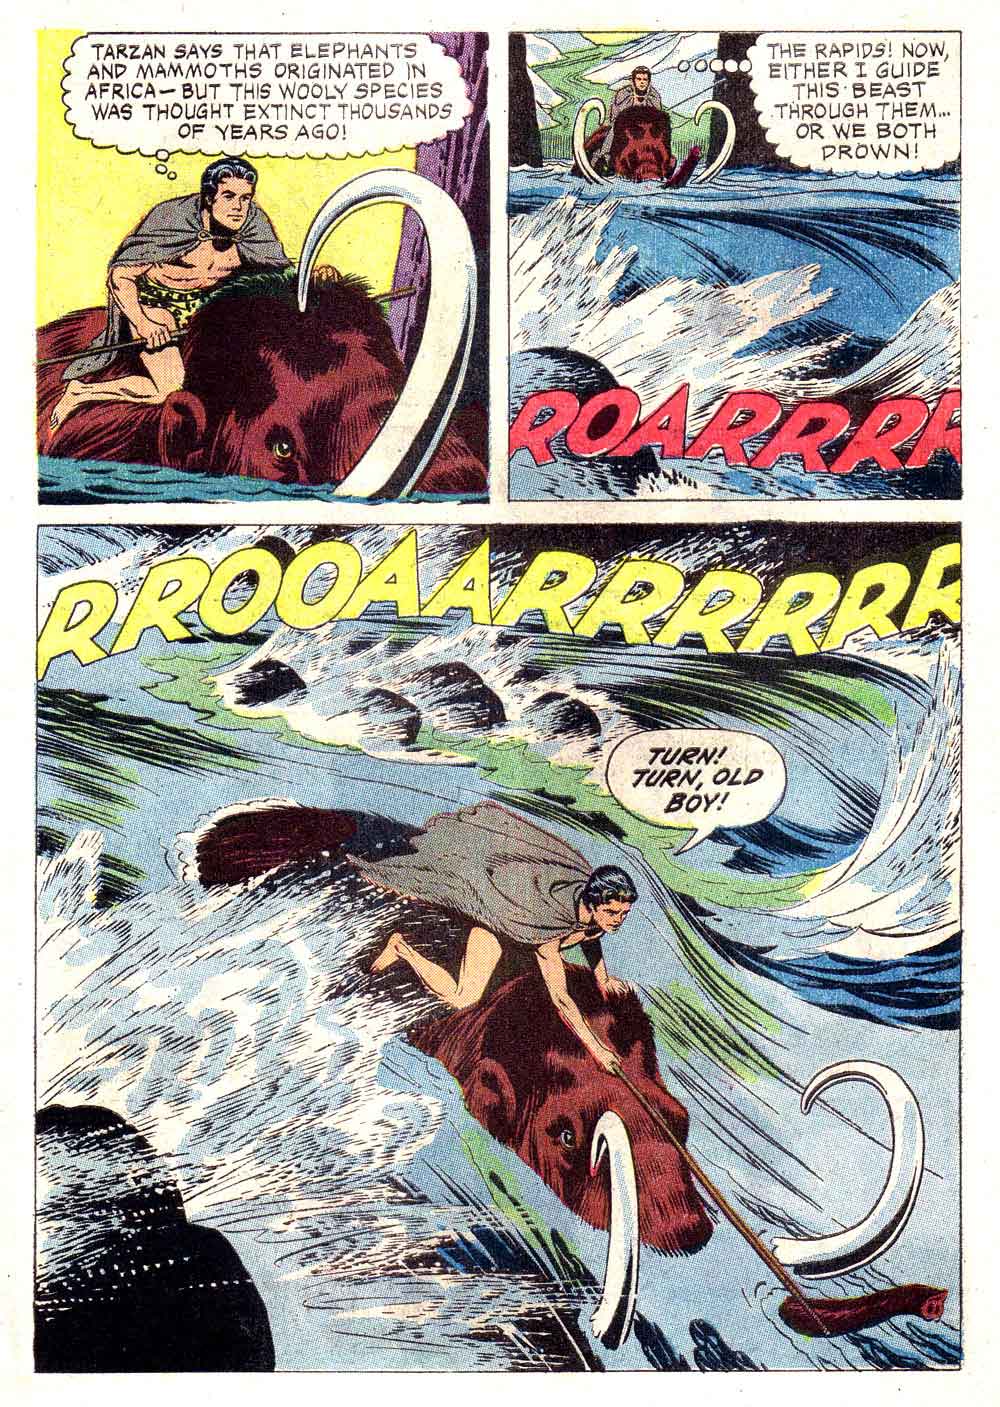 Korak Son of Tarzan v1 #4 gold key silver age 1960s comic book page art by Russ Manning